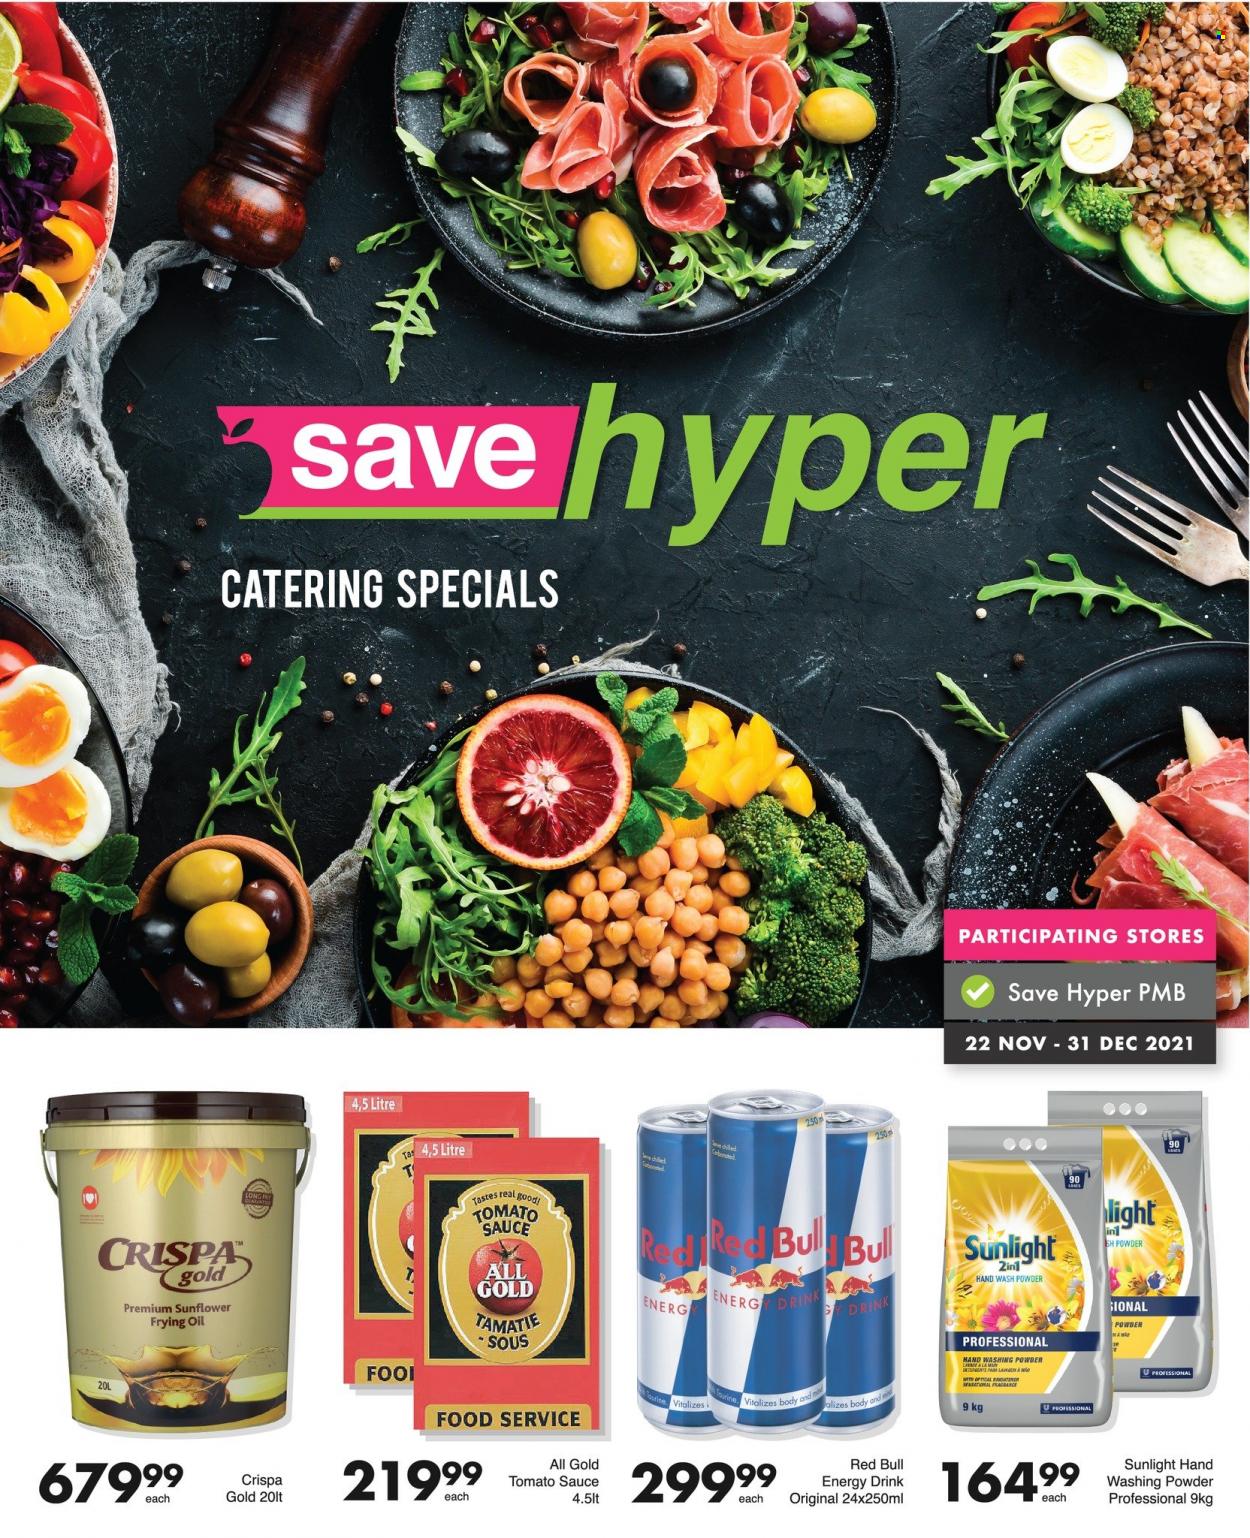 Save hyper specials - 11.22.2021 - 12.31.2021. 